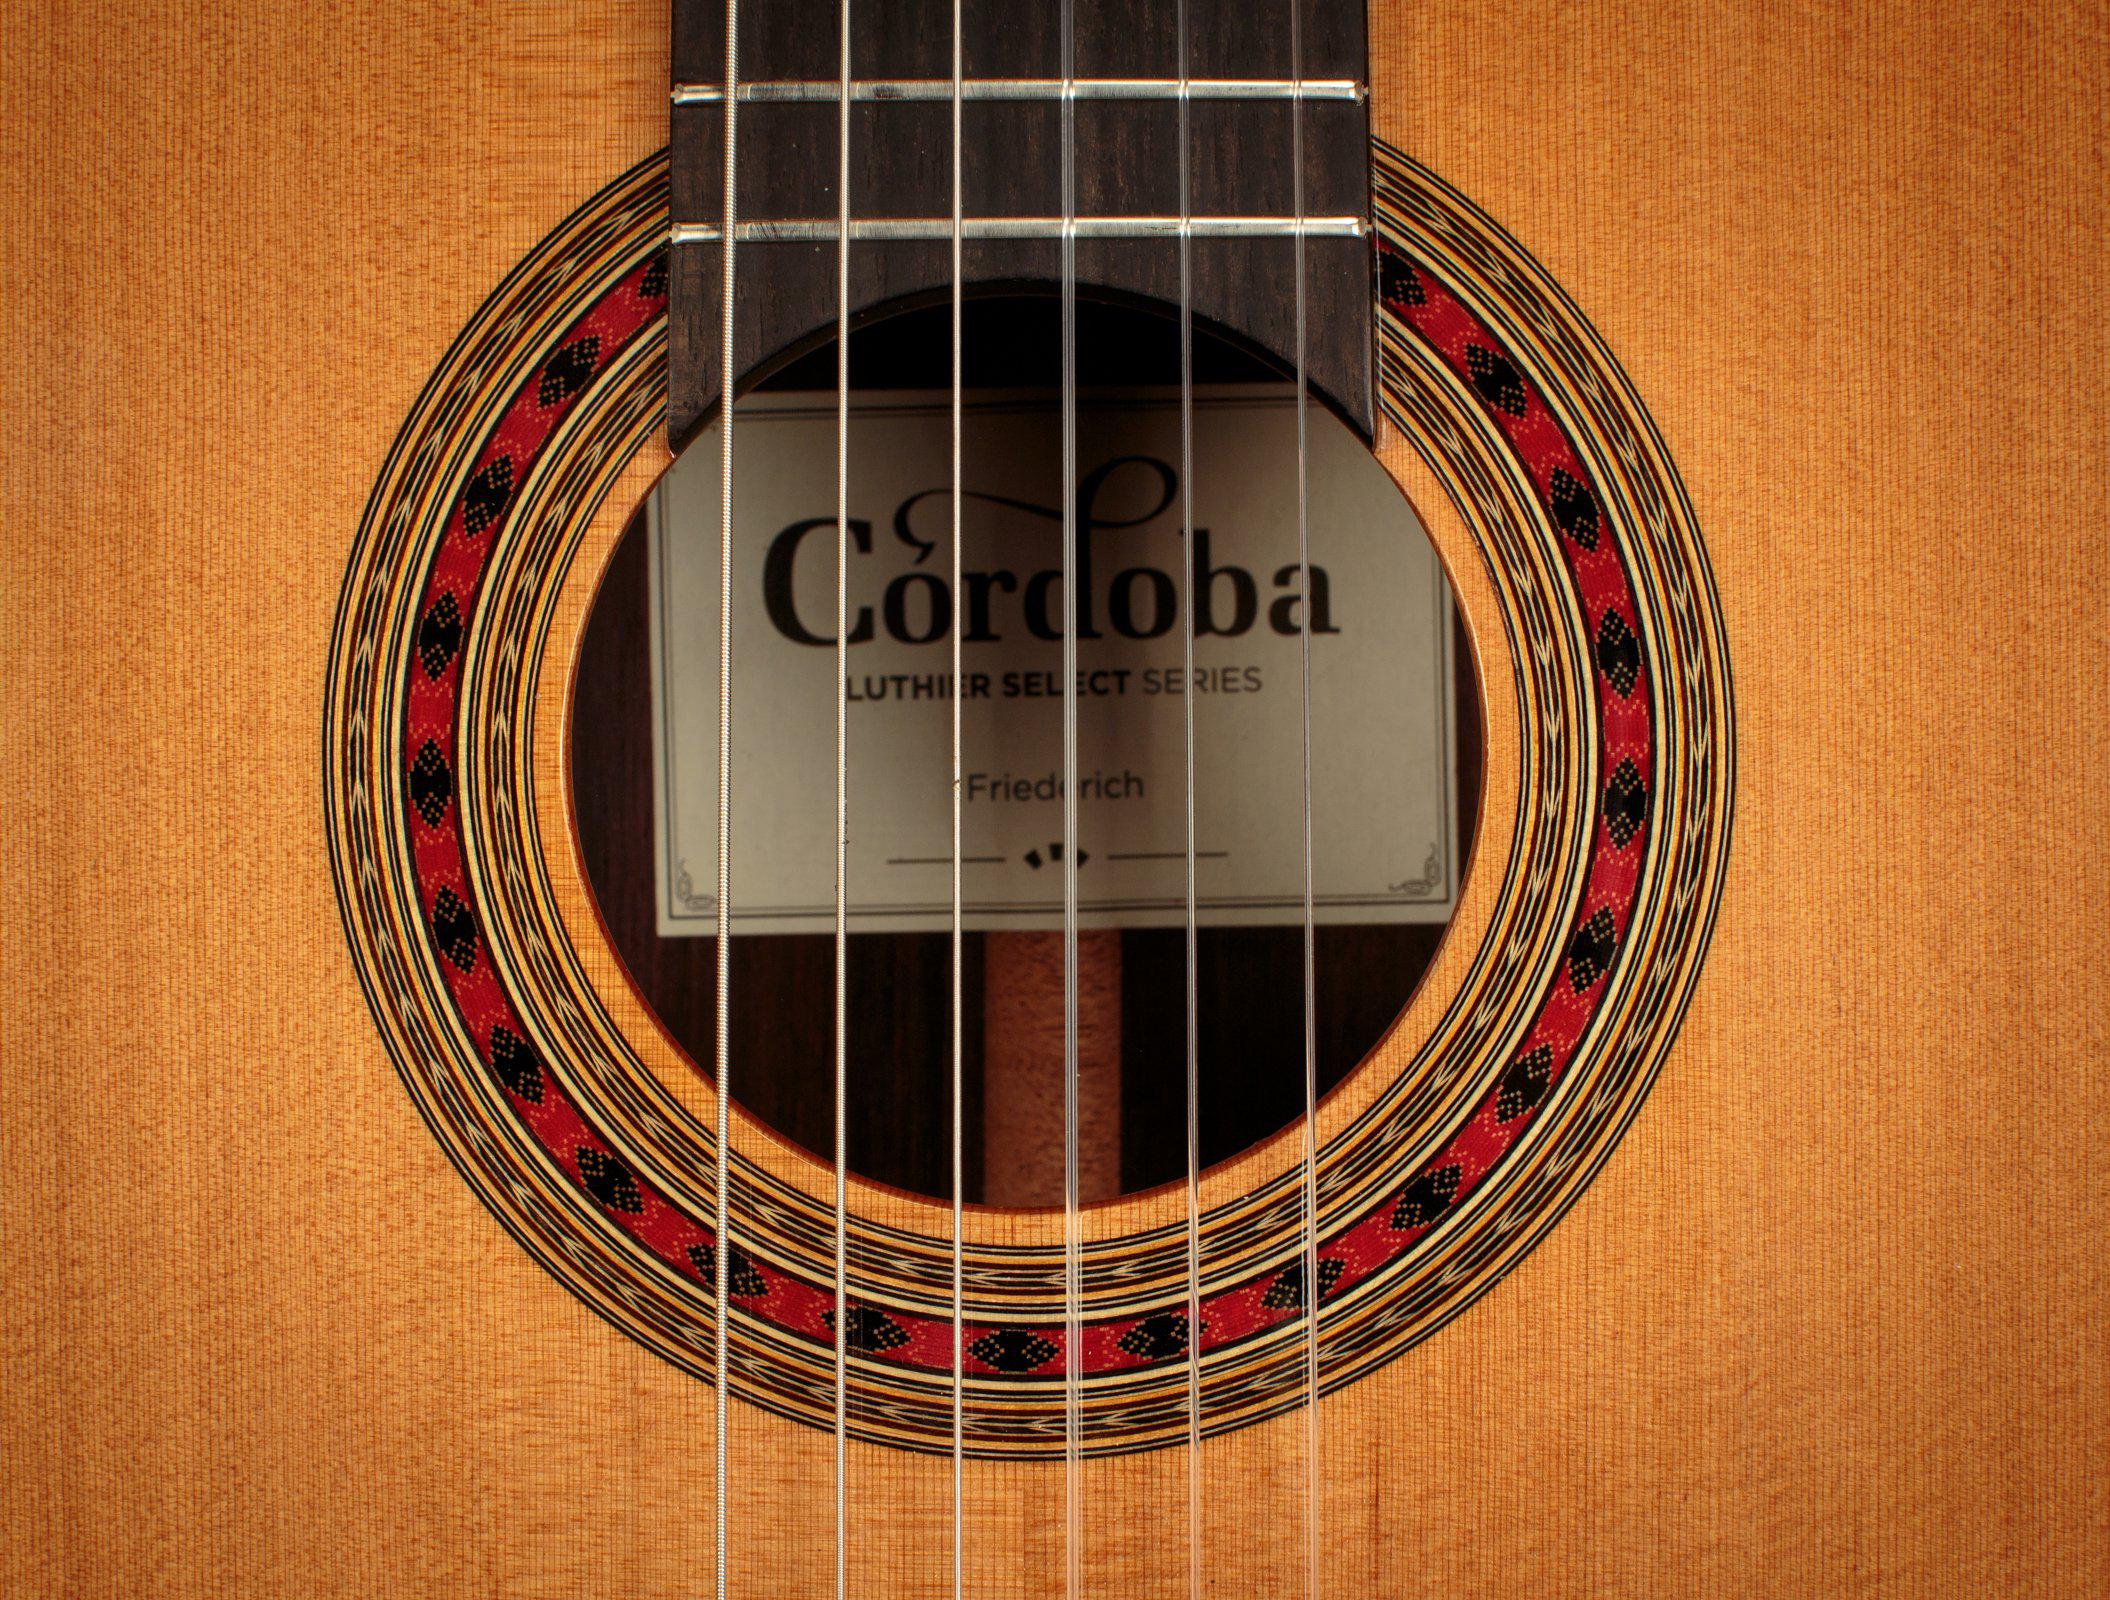 Cordoba Friederich Cedar Top Classical Guitar